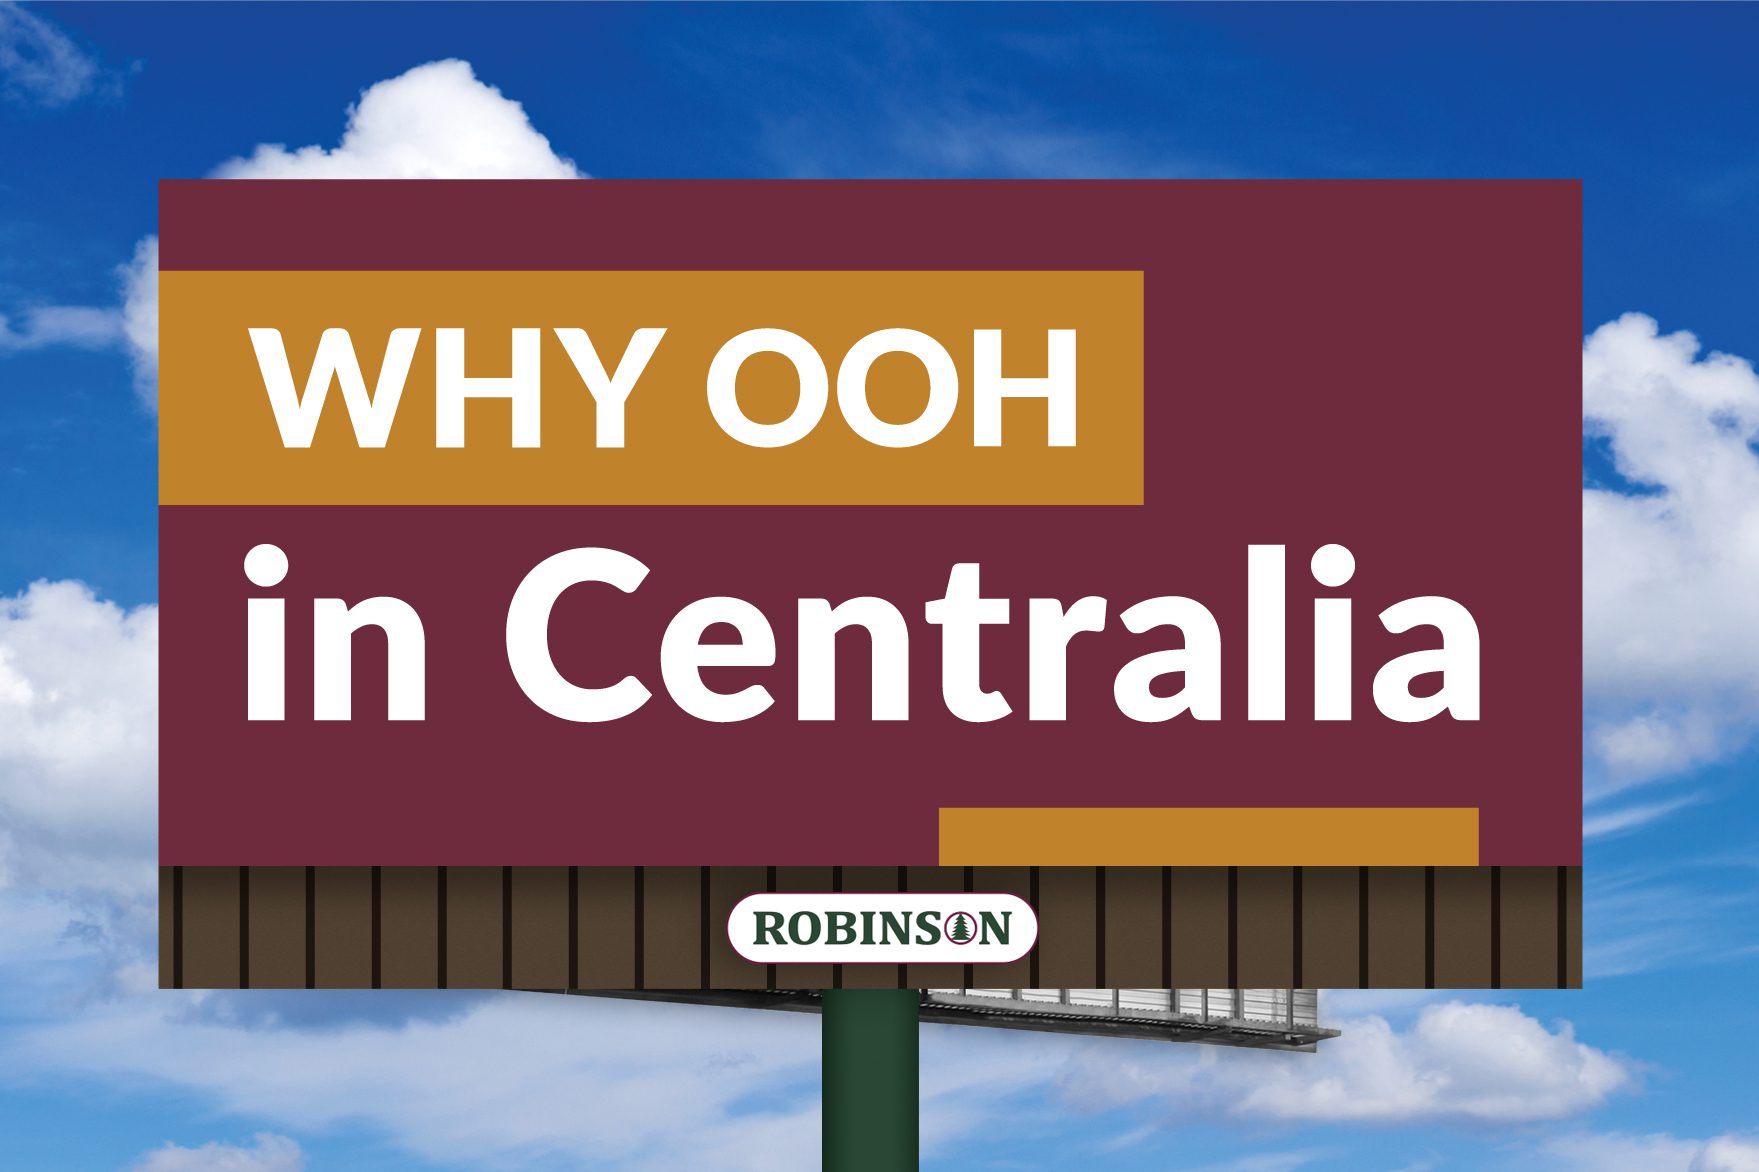 Centralia, Missouri digital billboard advertising